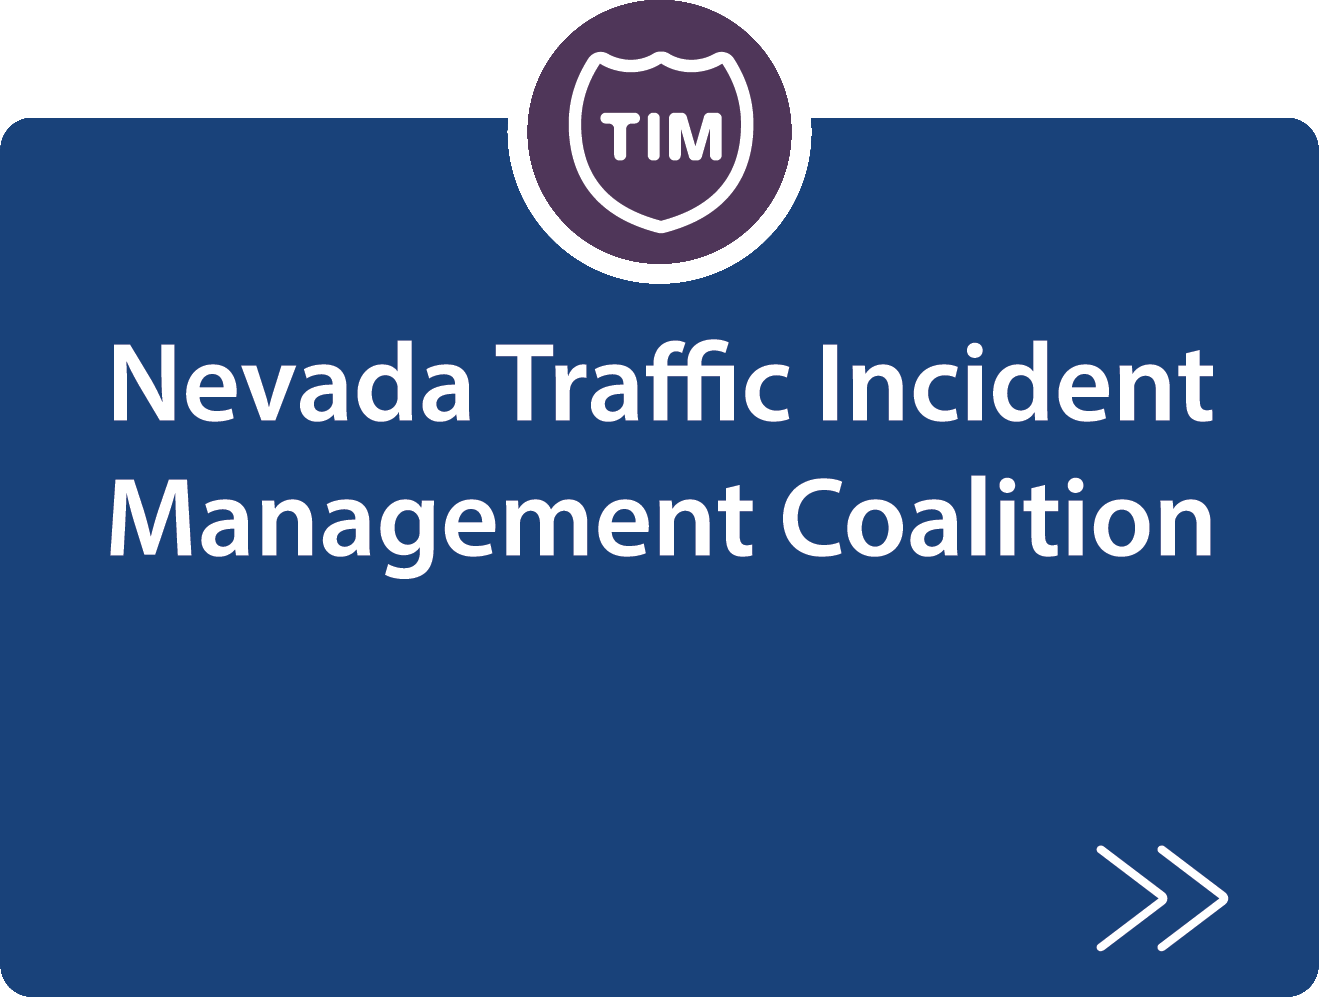 Nevada Traffic Incident Management Coalition strategy description